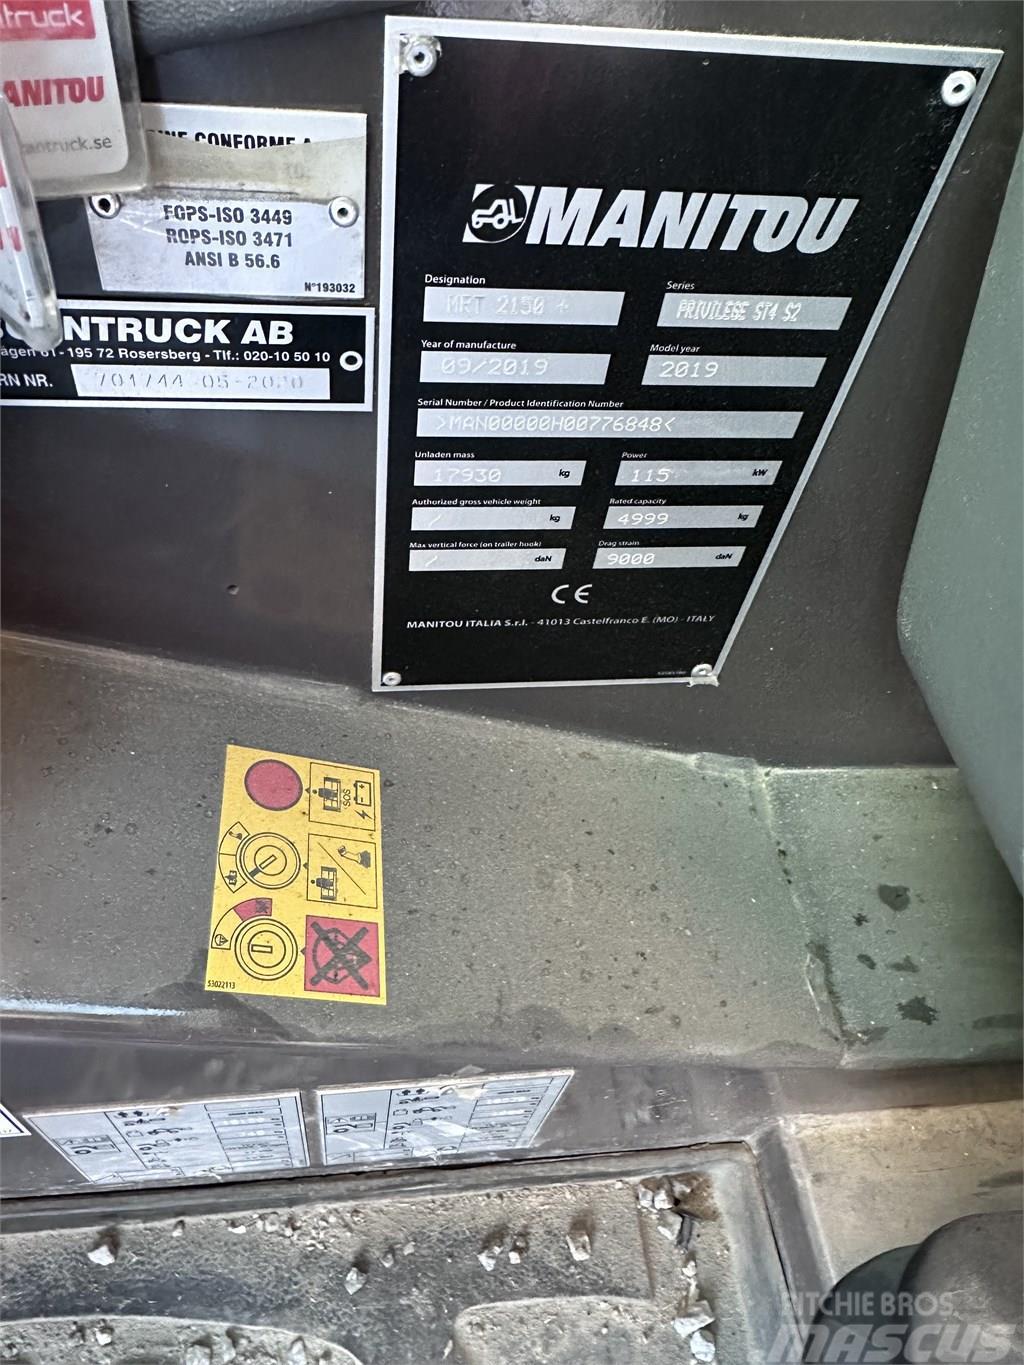 Manitou MRT 2150 Plus Privilege Telescopic handlers